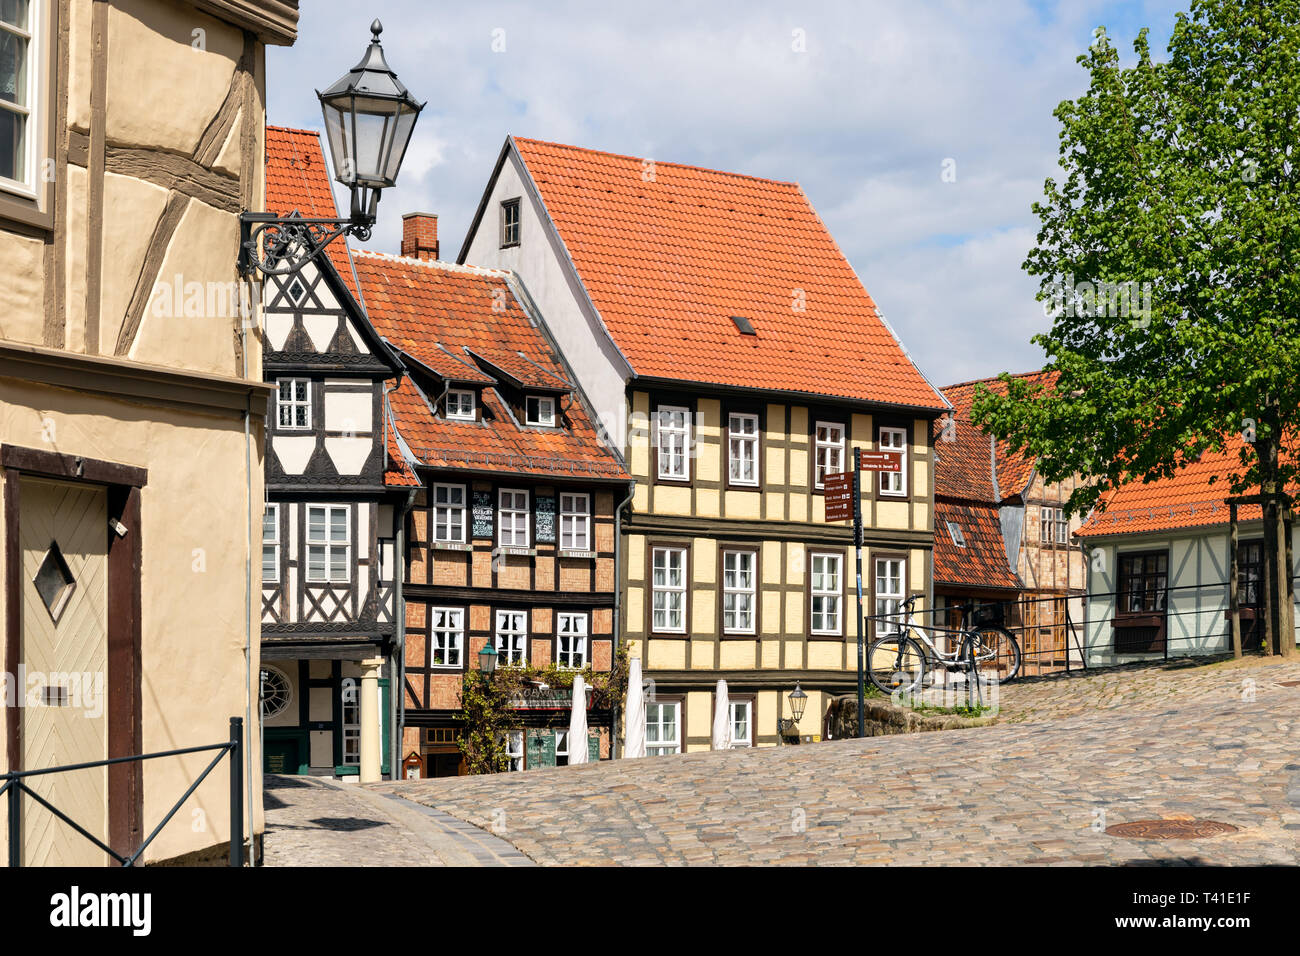 QUEDLINBURG, Germania - 26 APR 2018: storico in legno a telaio case nella città medievale di Quedlinburg, a nord di le montagne Harz. Sassonia-anhalt, Tedesco Foto Stock